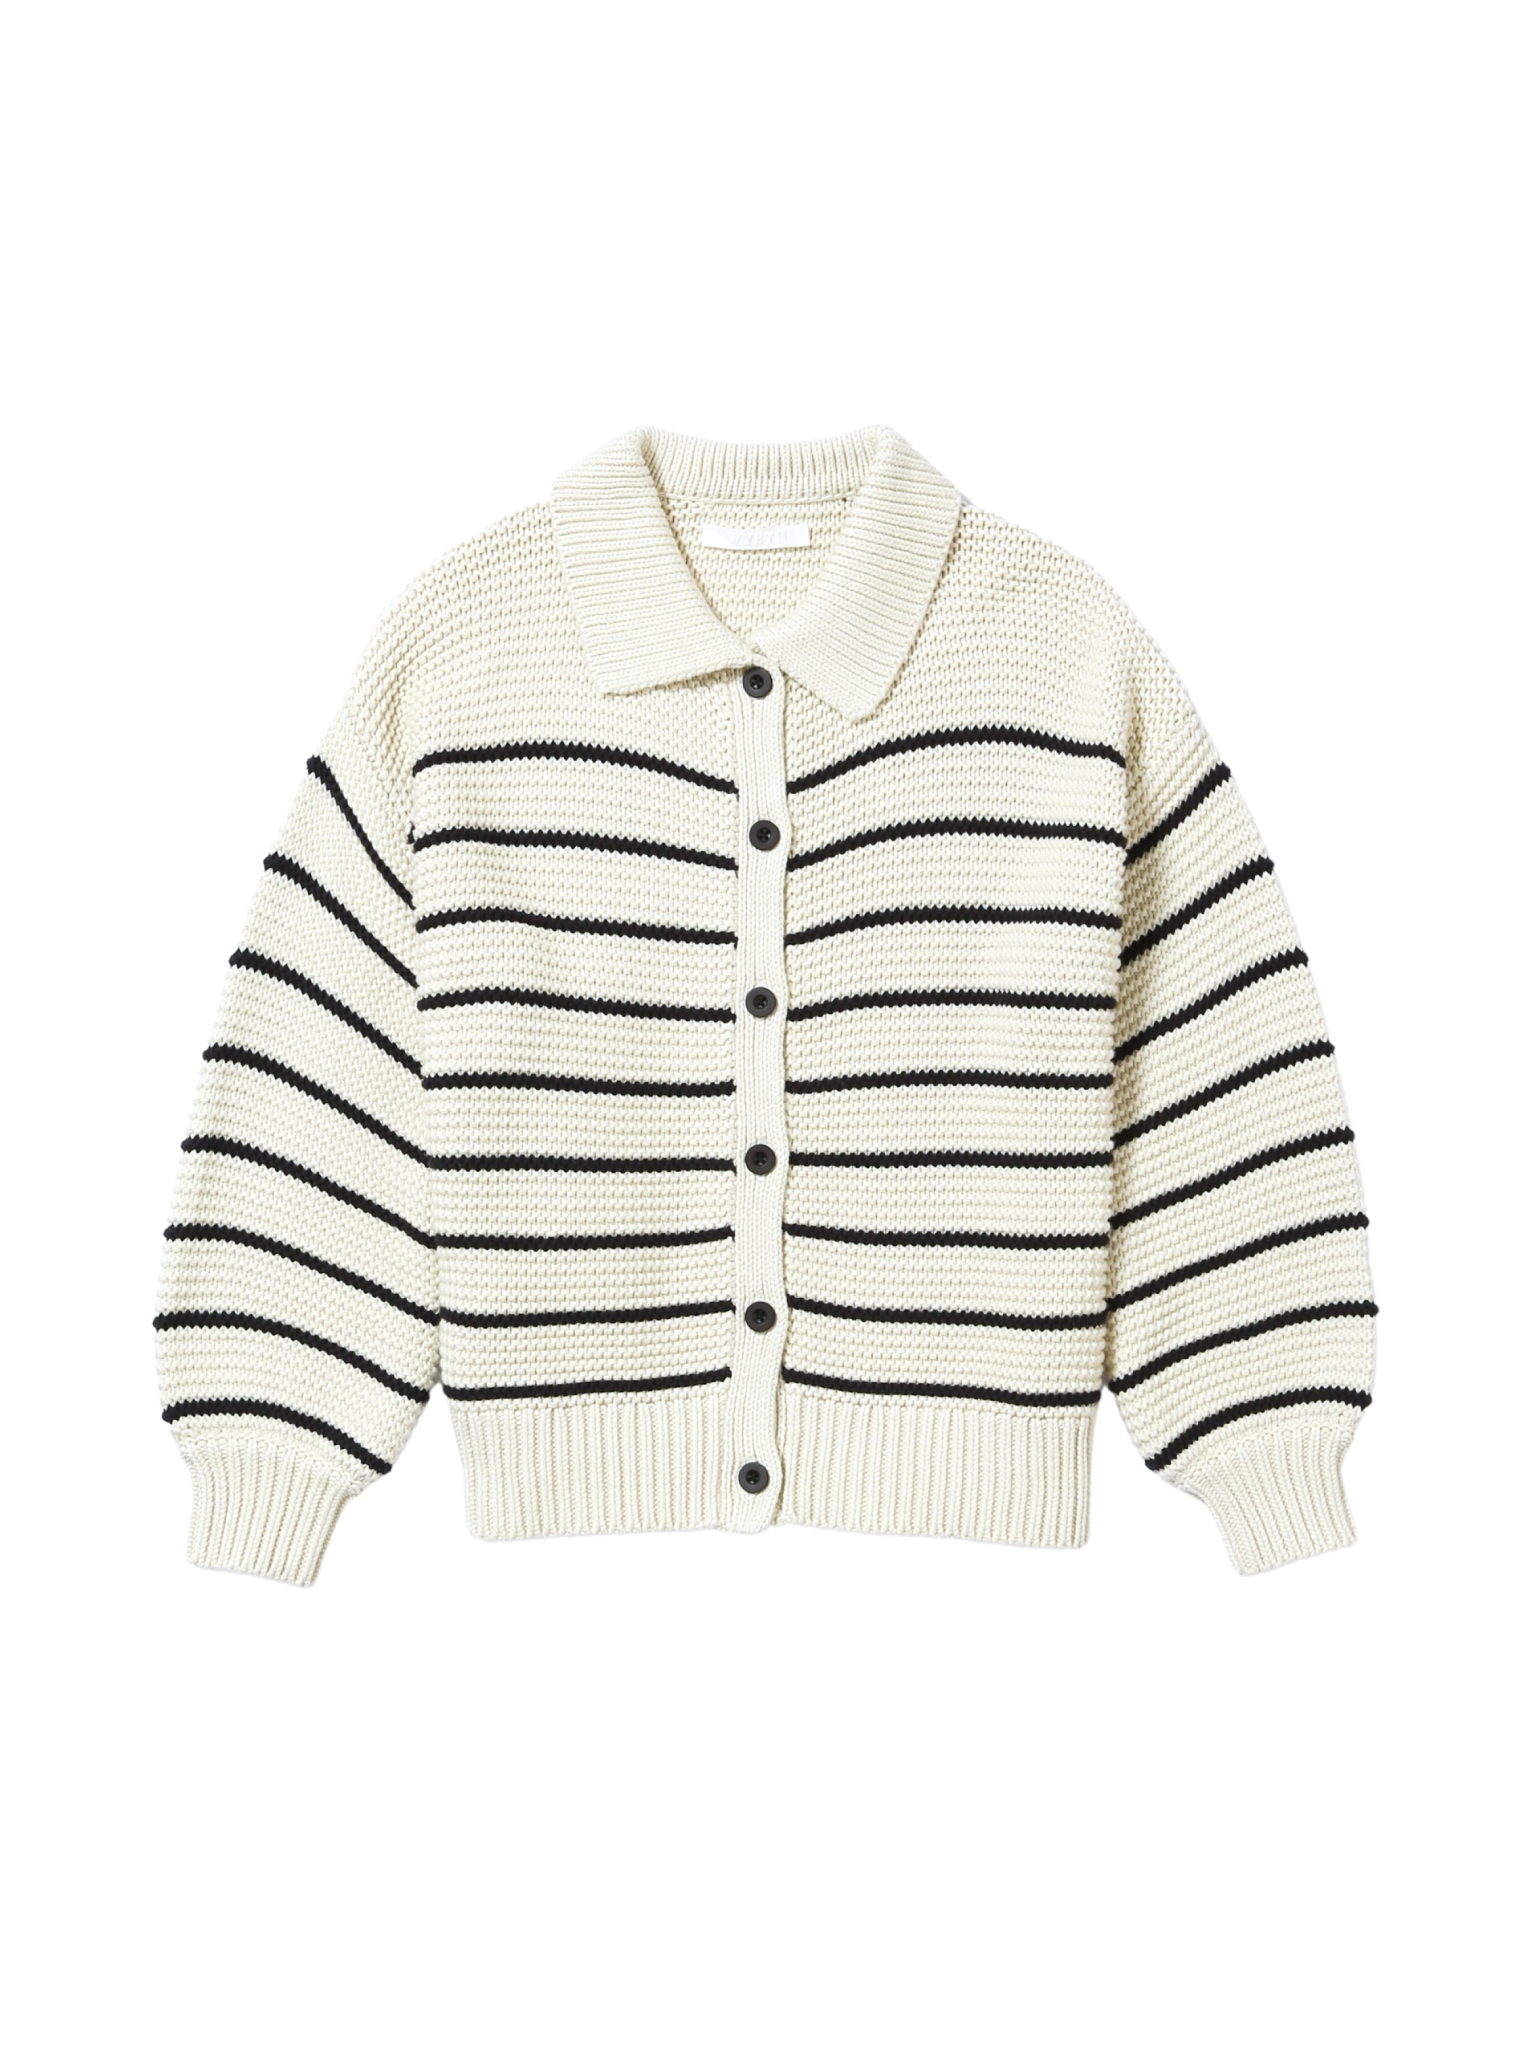 Carmel Sweater - FINAL SALE